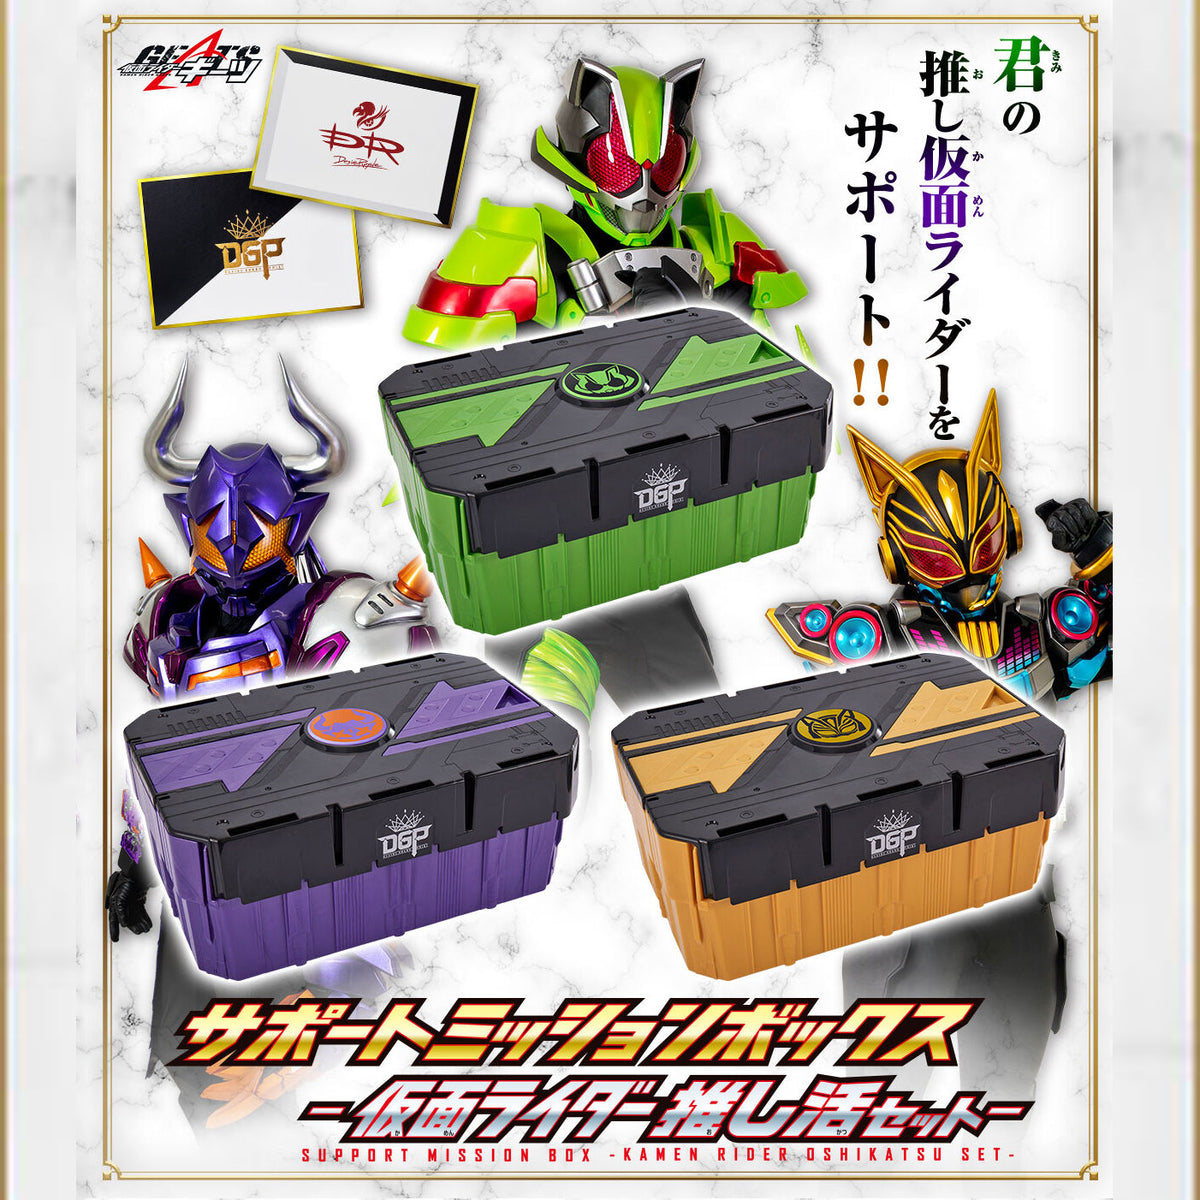 Support Mission Box - Kamen Rider Oshikatsu Set